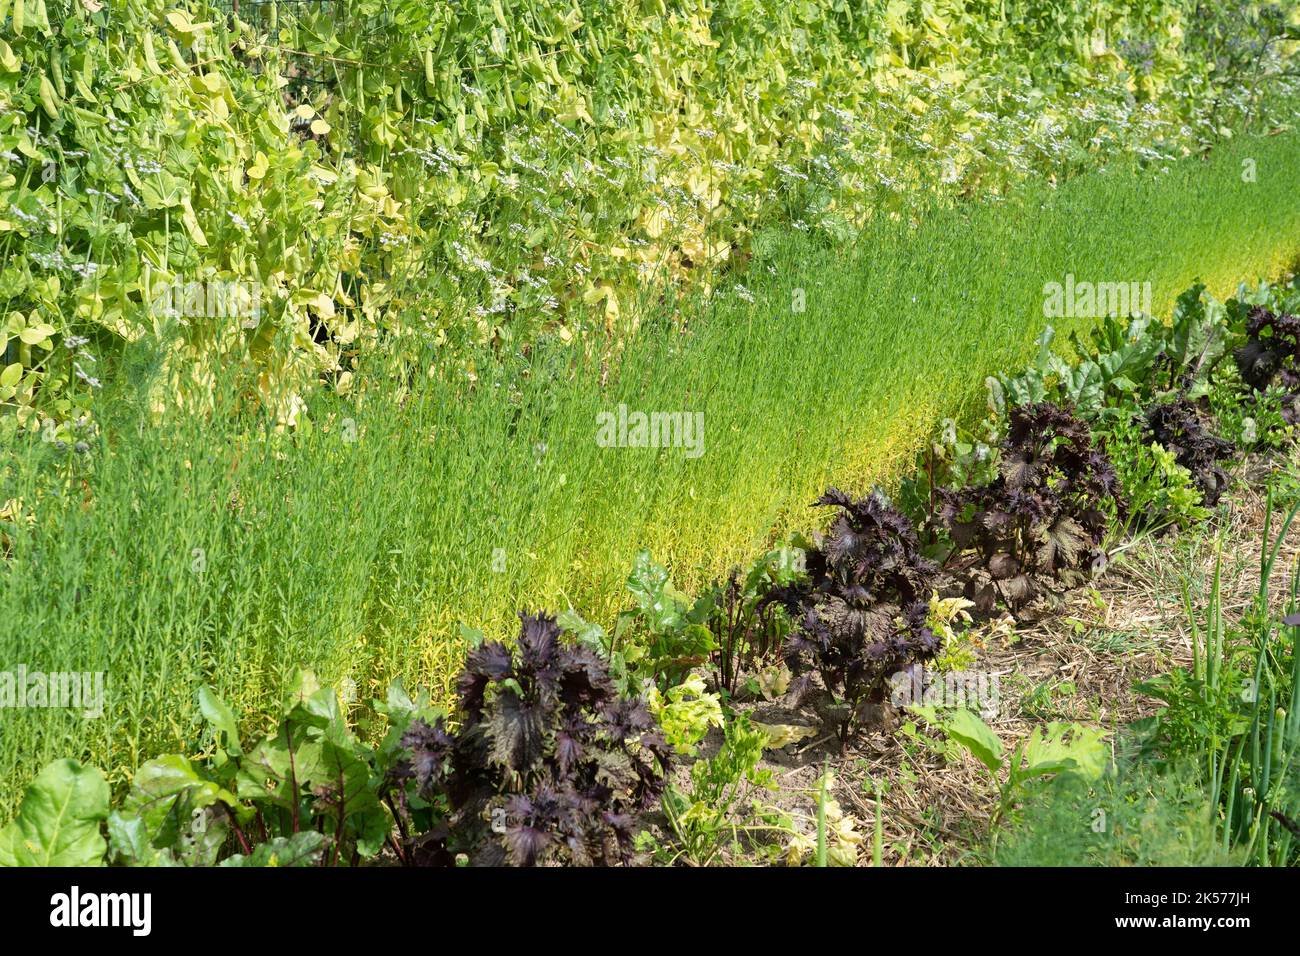 France, Seine Maritime, Tourville sur Arques, Miromesnil castle, Guy de Maupassant's birthplace, remarkable vegetable garden, row planted with flax Stock Photo